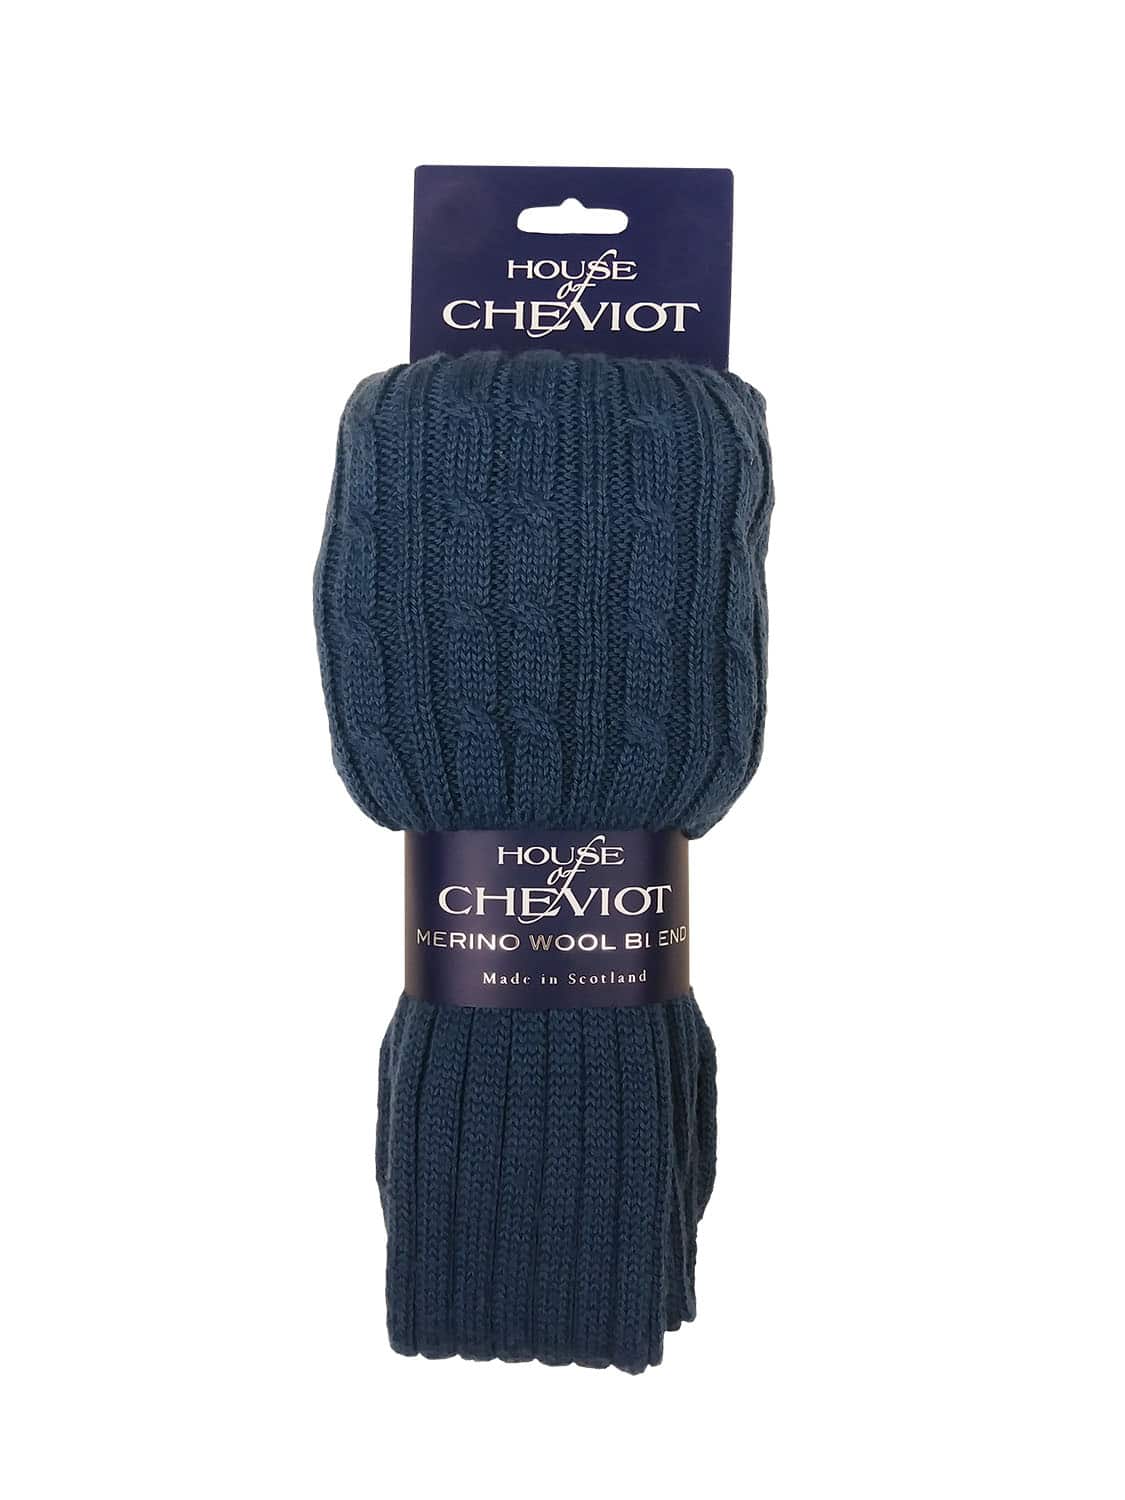 Scottish Wool Blend Charcoal 3 Sizes New Scottish Gents Kilt Hose Socks